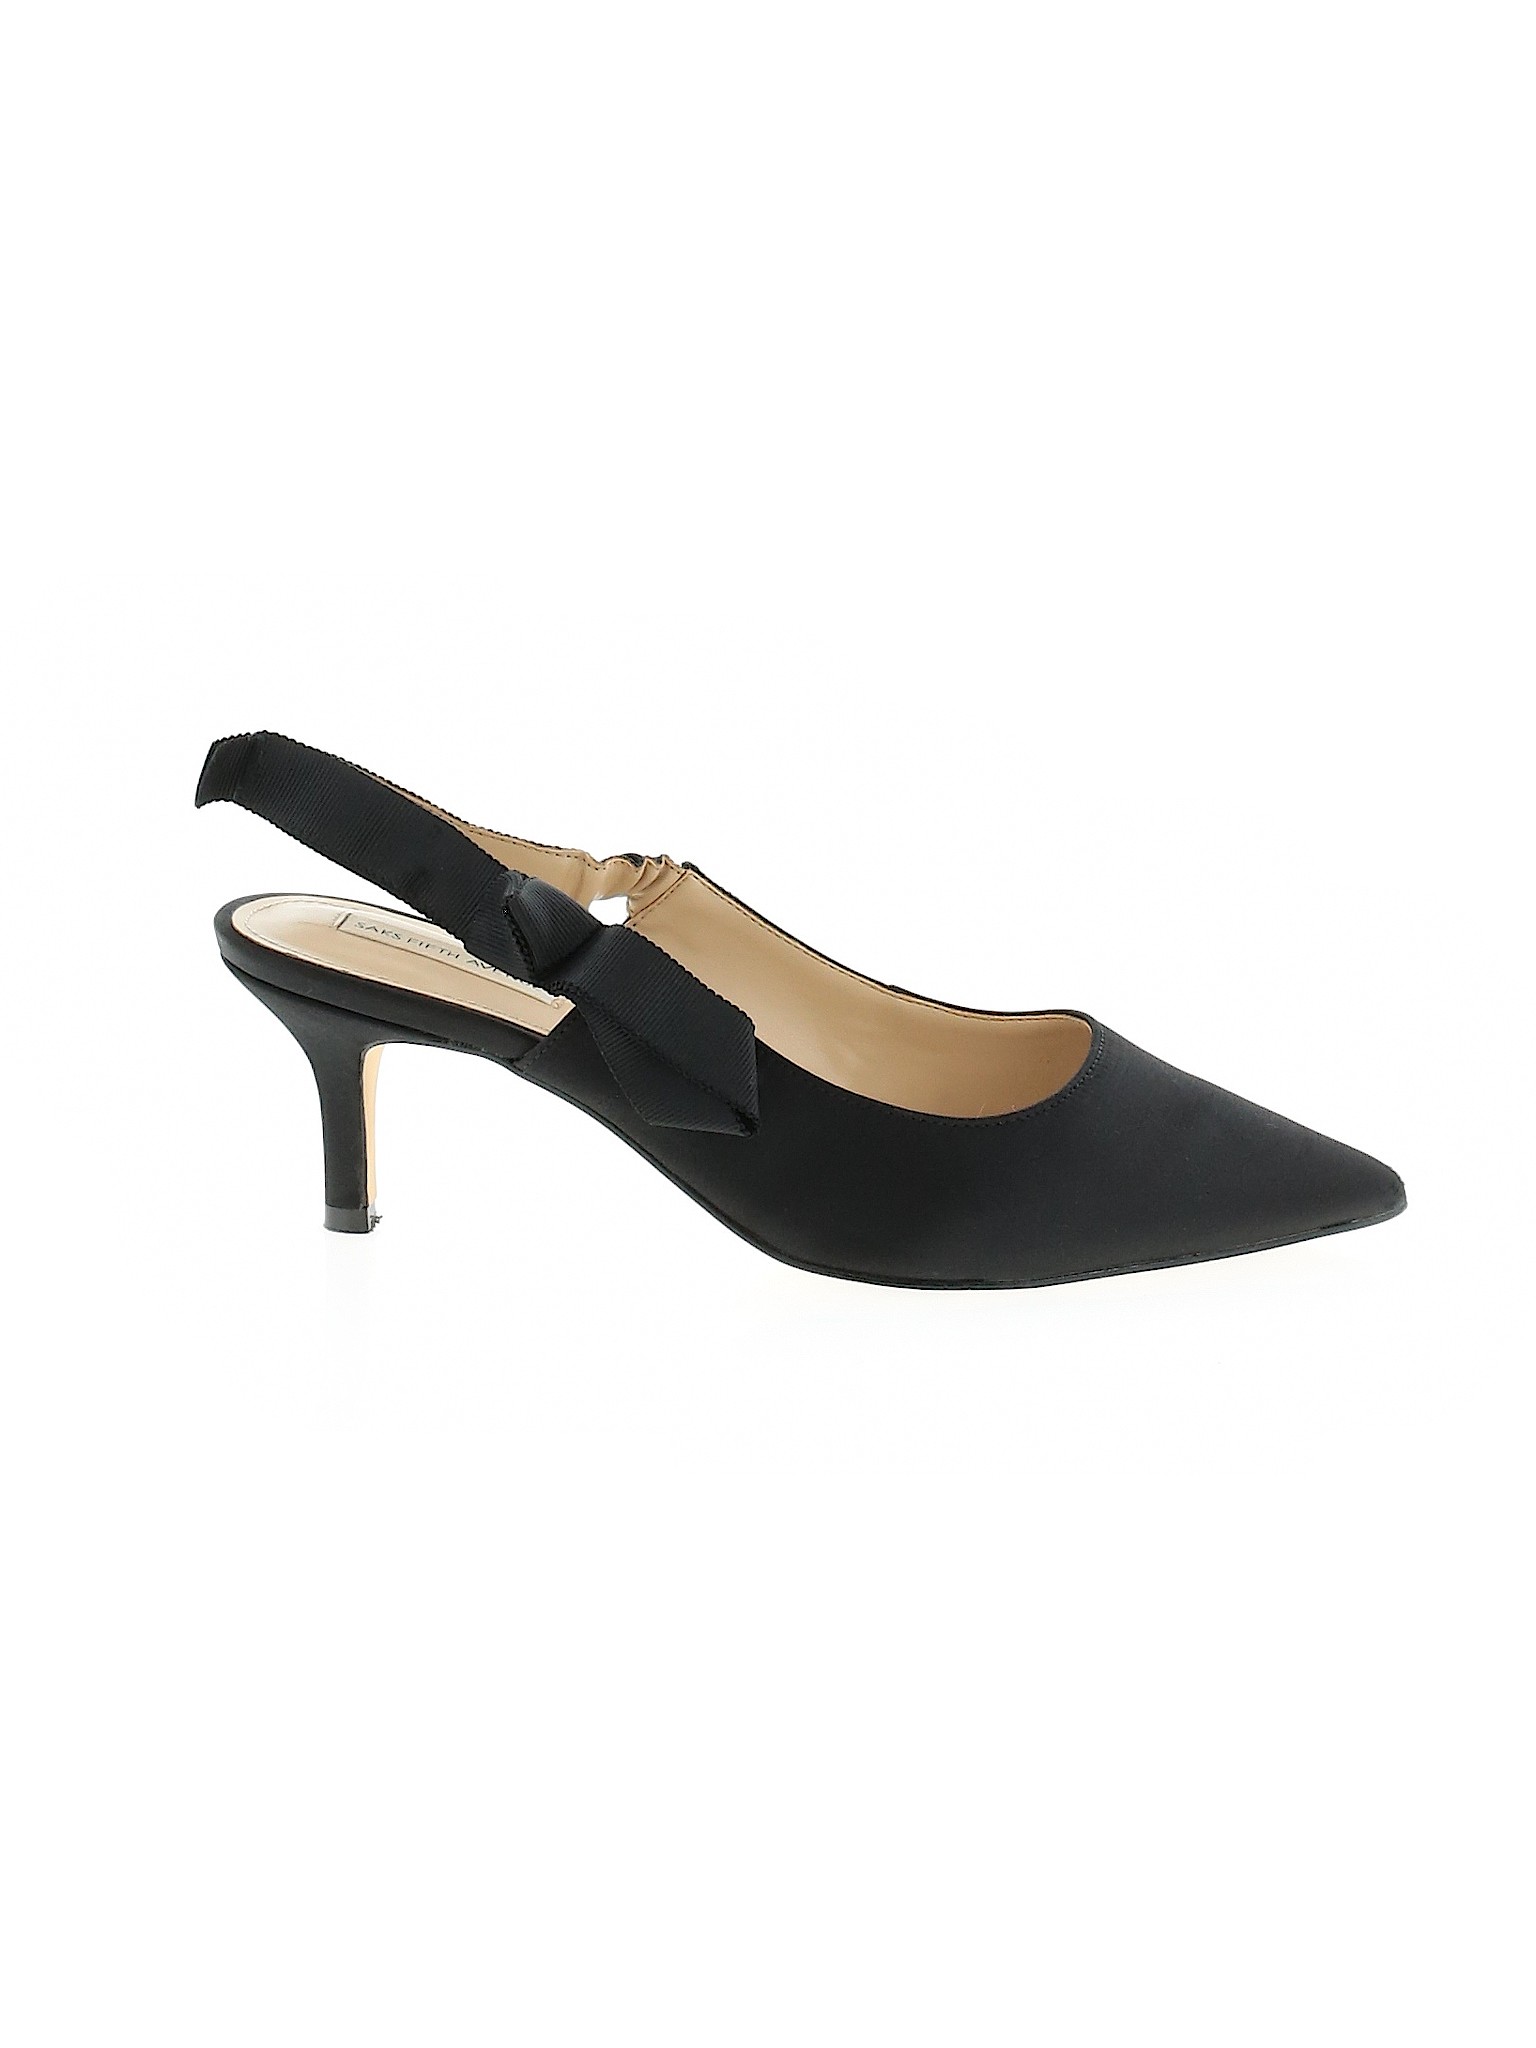 Saks Fifth Avenue Solid Black Heels Size 10 - 80% off | thredUP